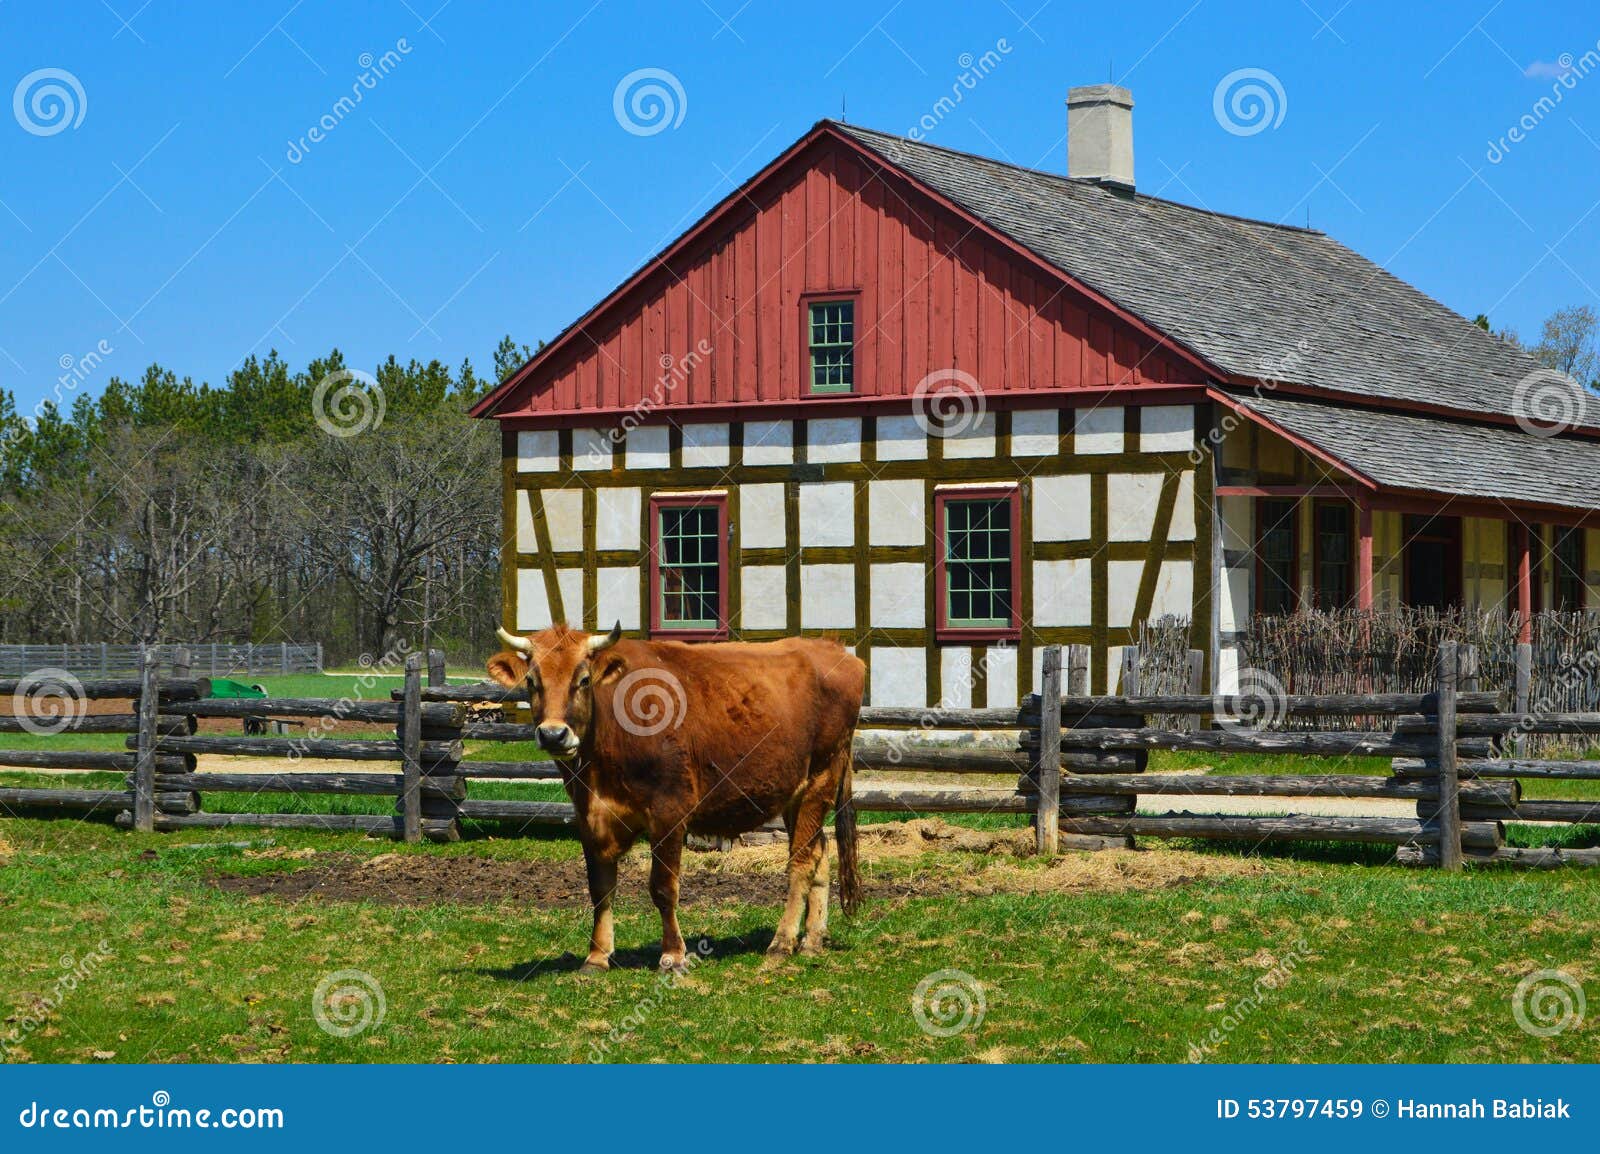 cow historical schultz farm house